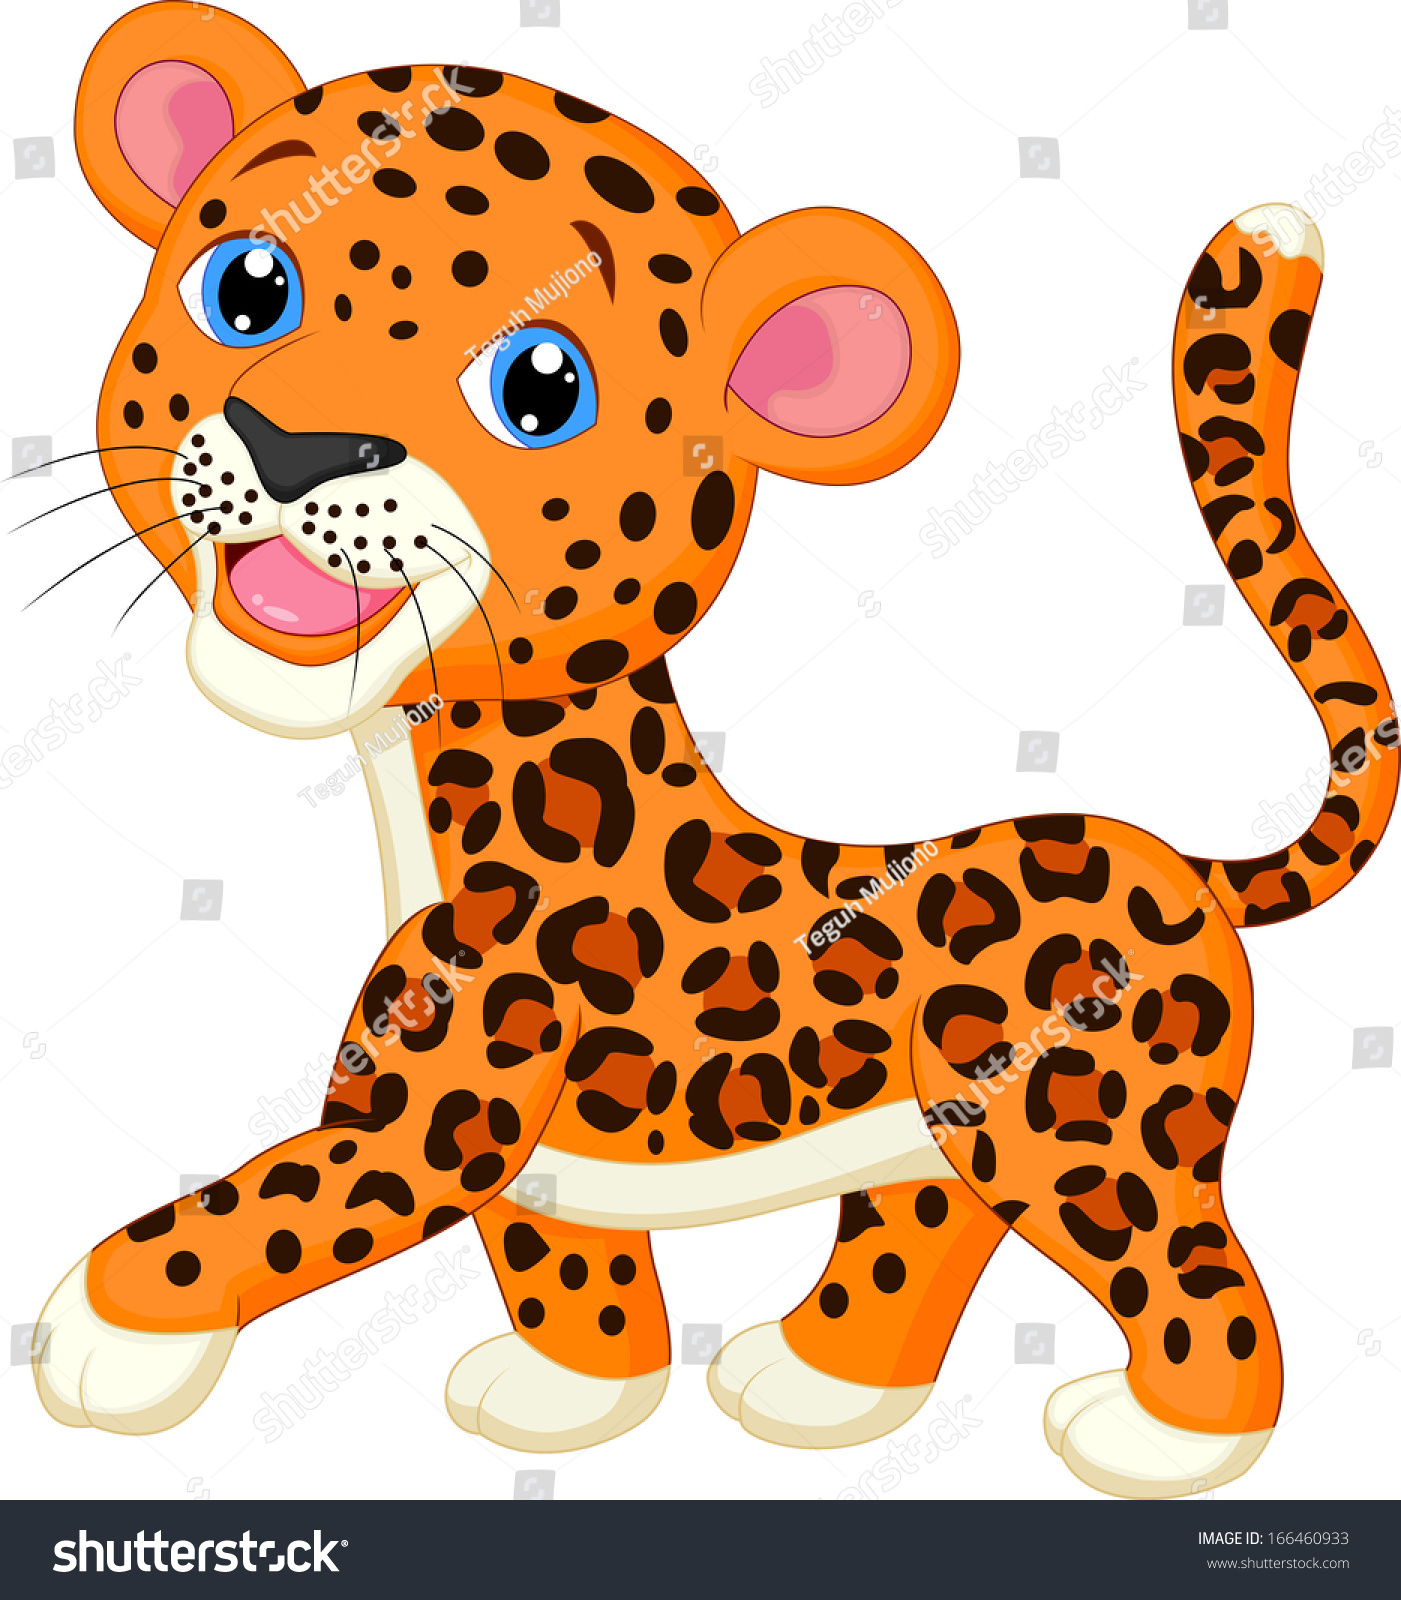 Cute Leopard Cartoon Stock Photo 166460933 : Shutterstock